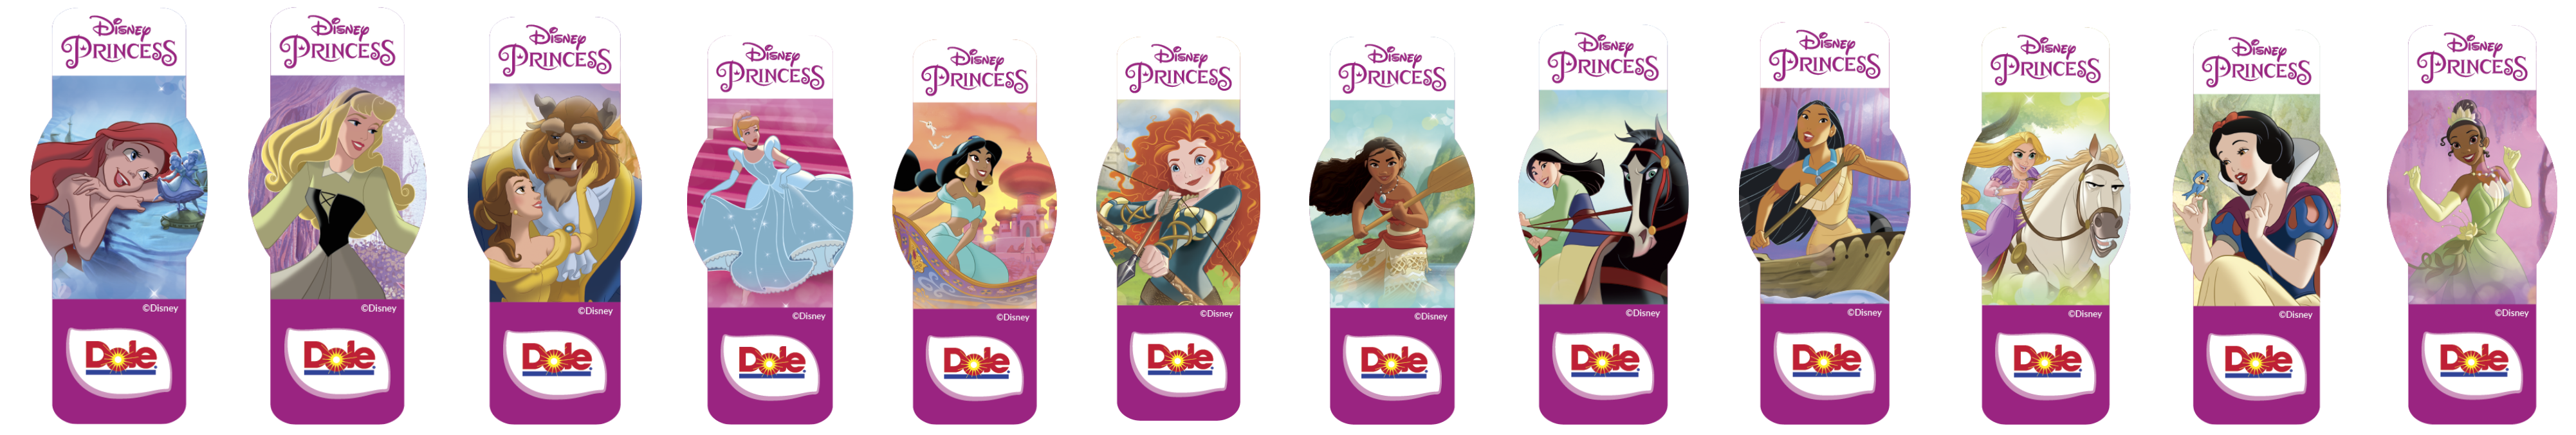 Dole's Disney Princess stickers